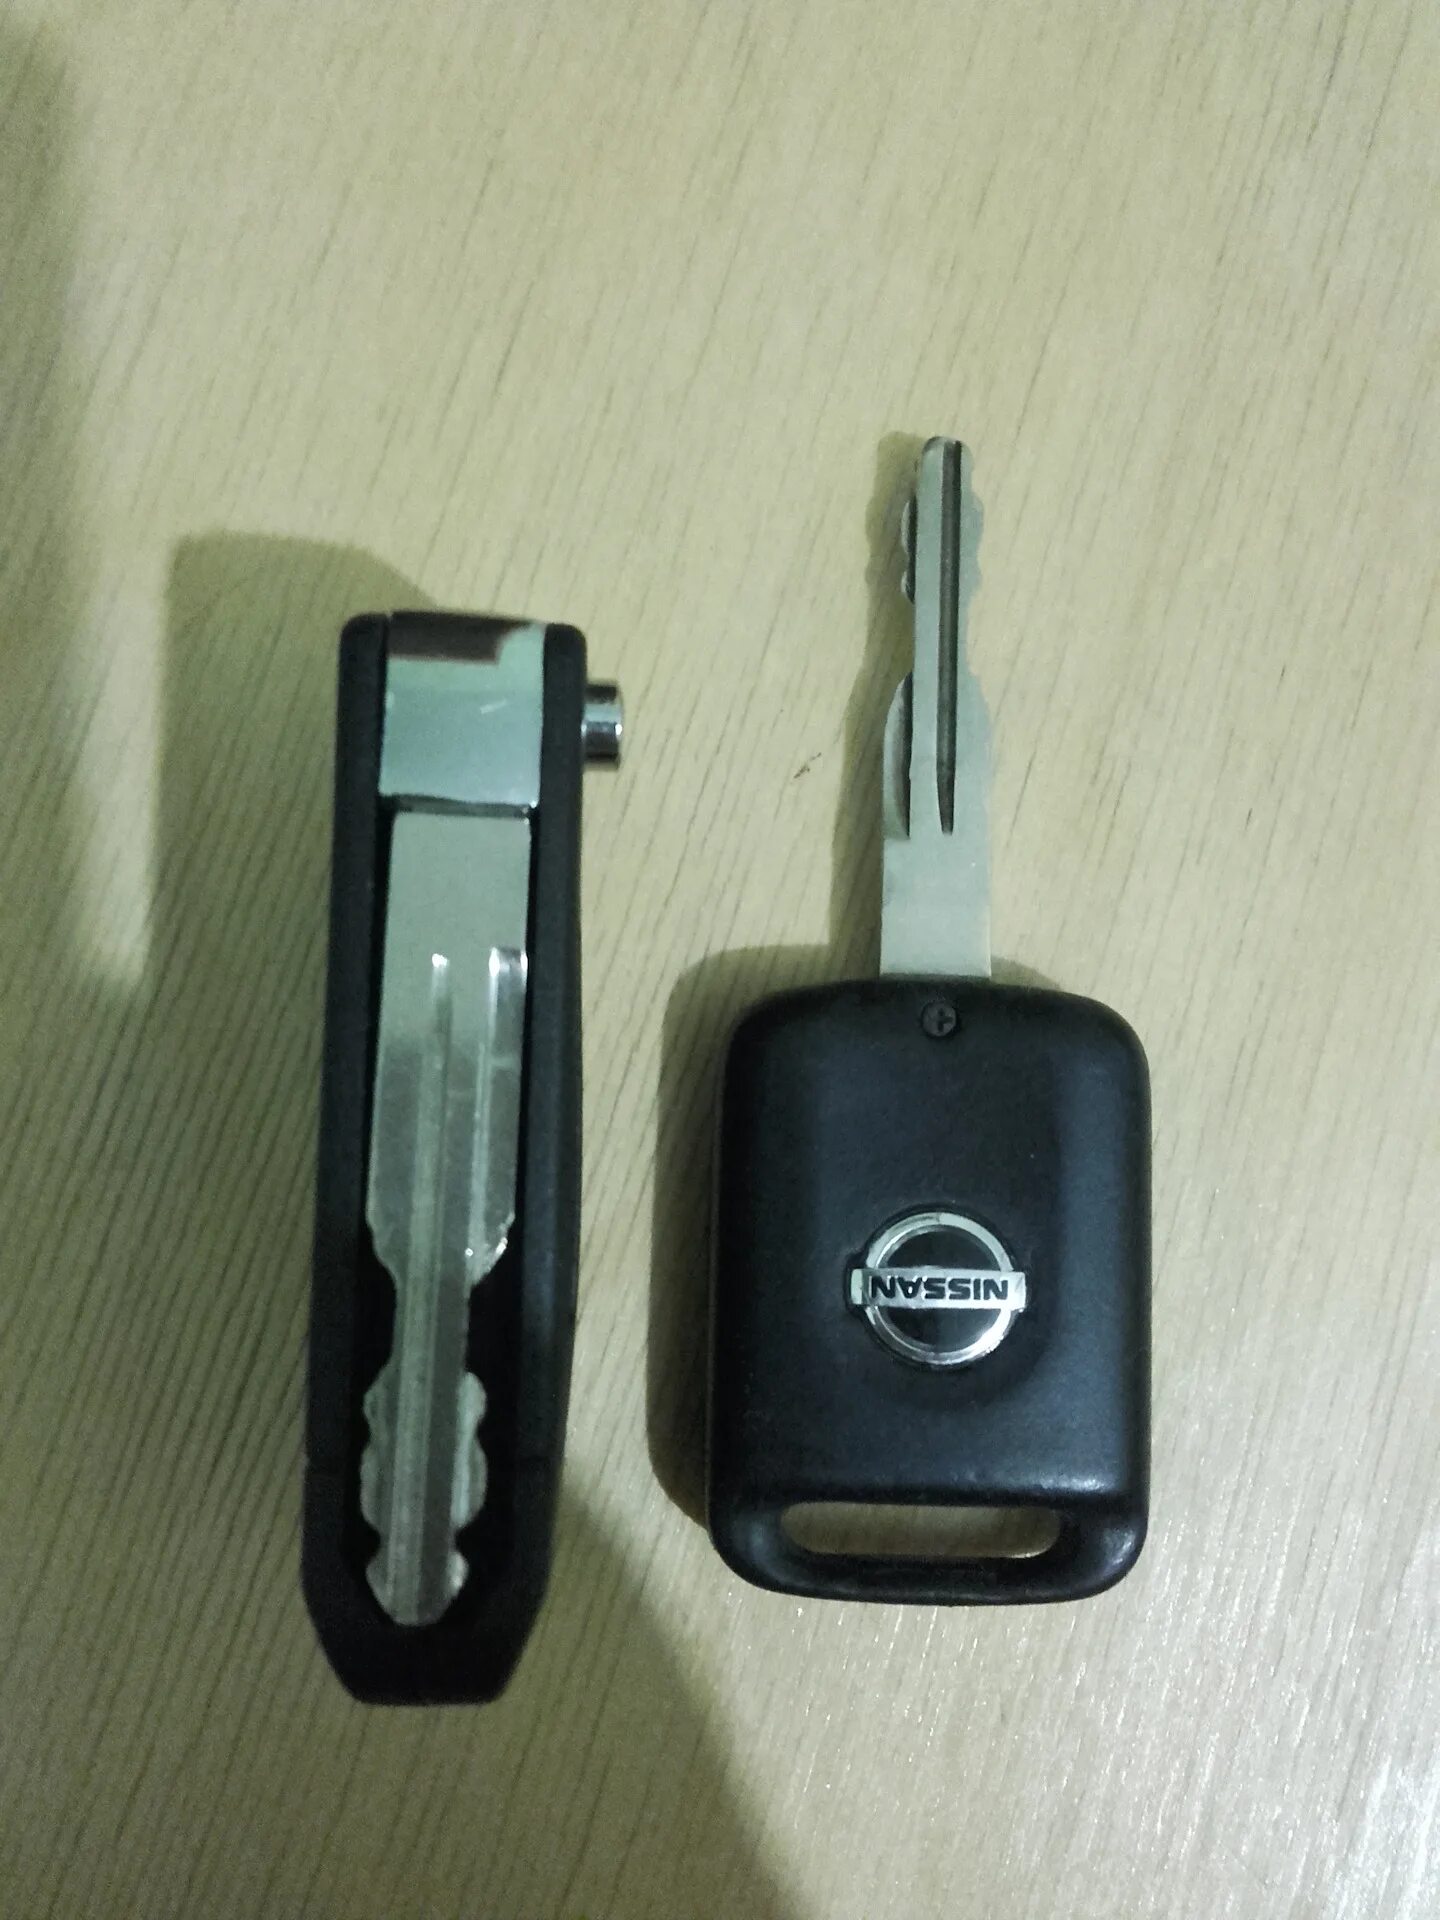 Выкидной ключ Ниссан Альмера Классик. Nissan Sunny b15 ключ. Выкидной ключ Ниссан Санни b15. Nissan Almera Classic ключ.